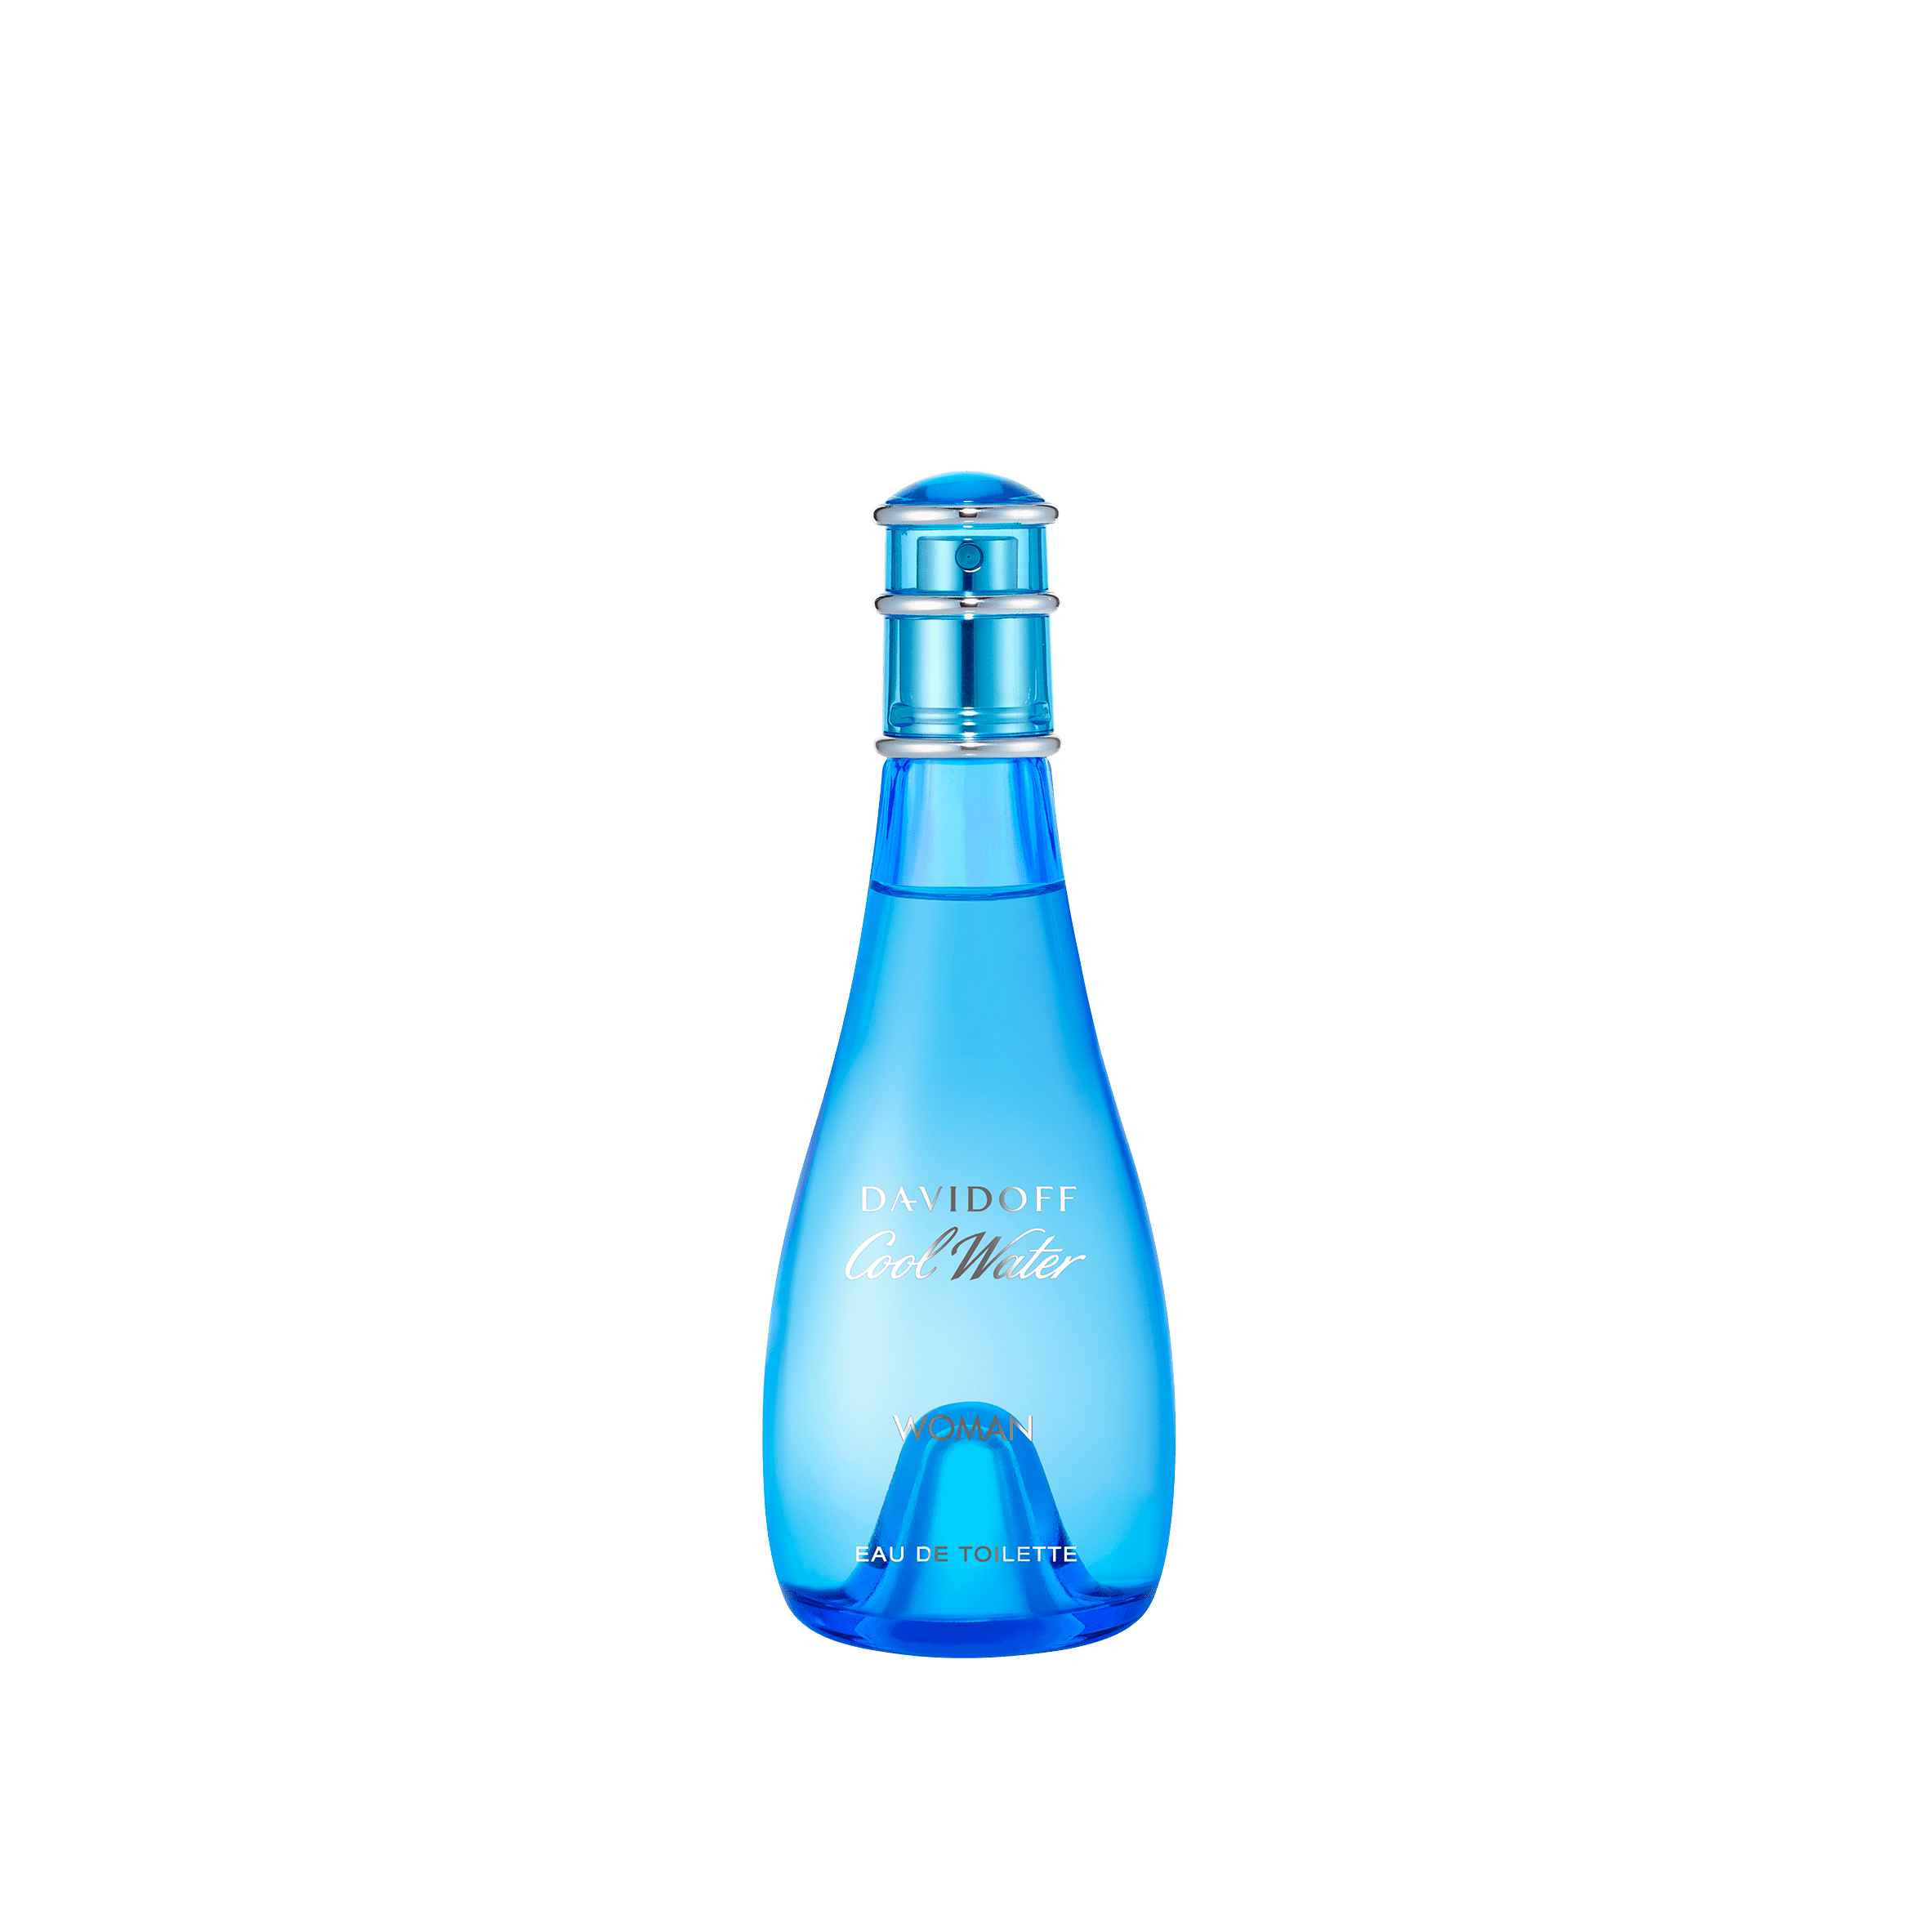 Davidoff Cool Water Zino EDT Spray Perfume for Women by Davidoff